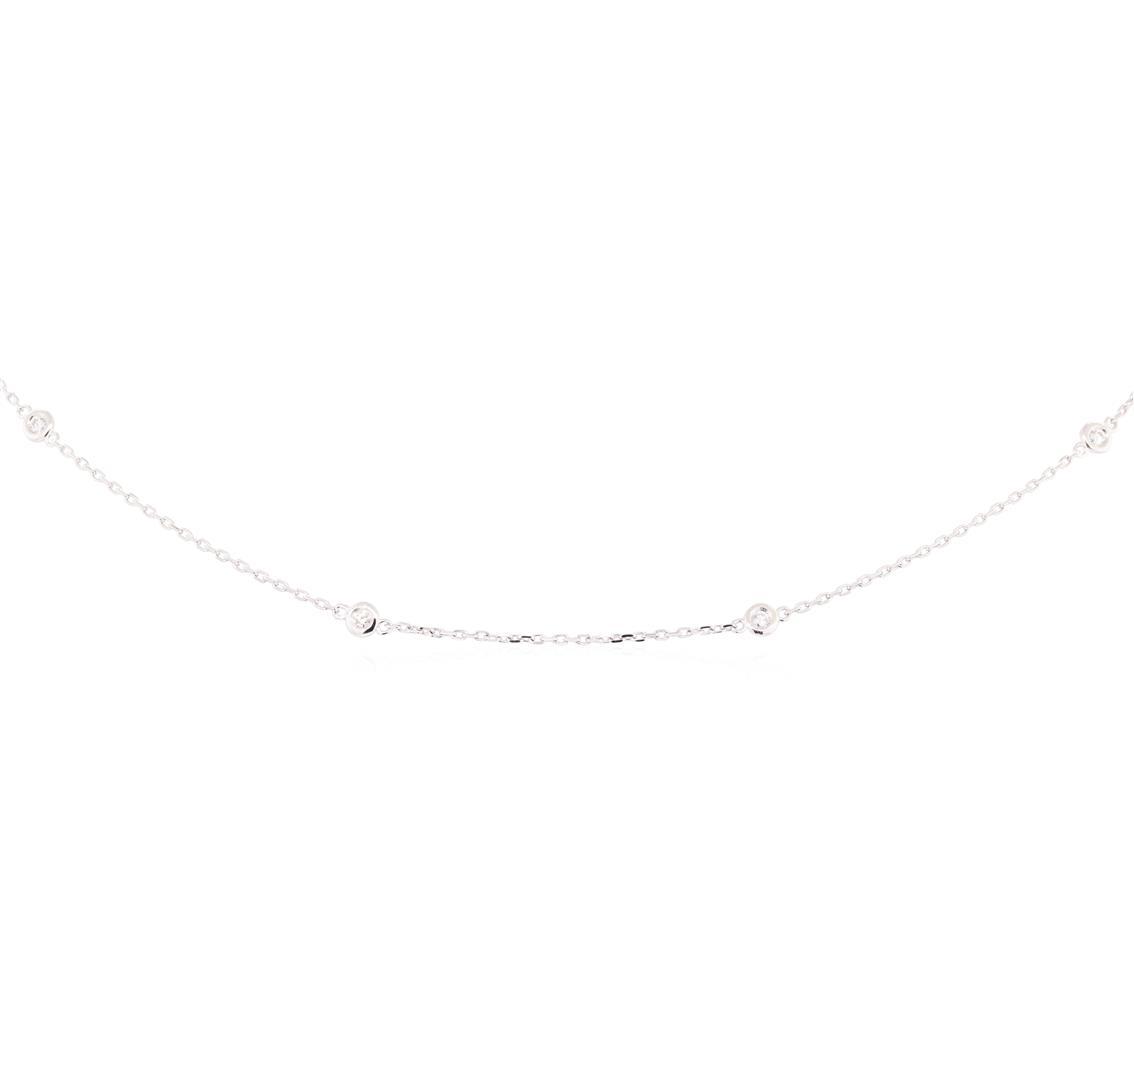 0.40 ctw Diamond Necklace - 18KT White Gold